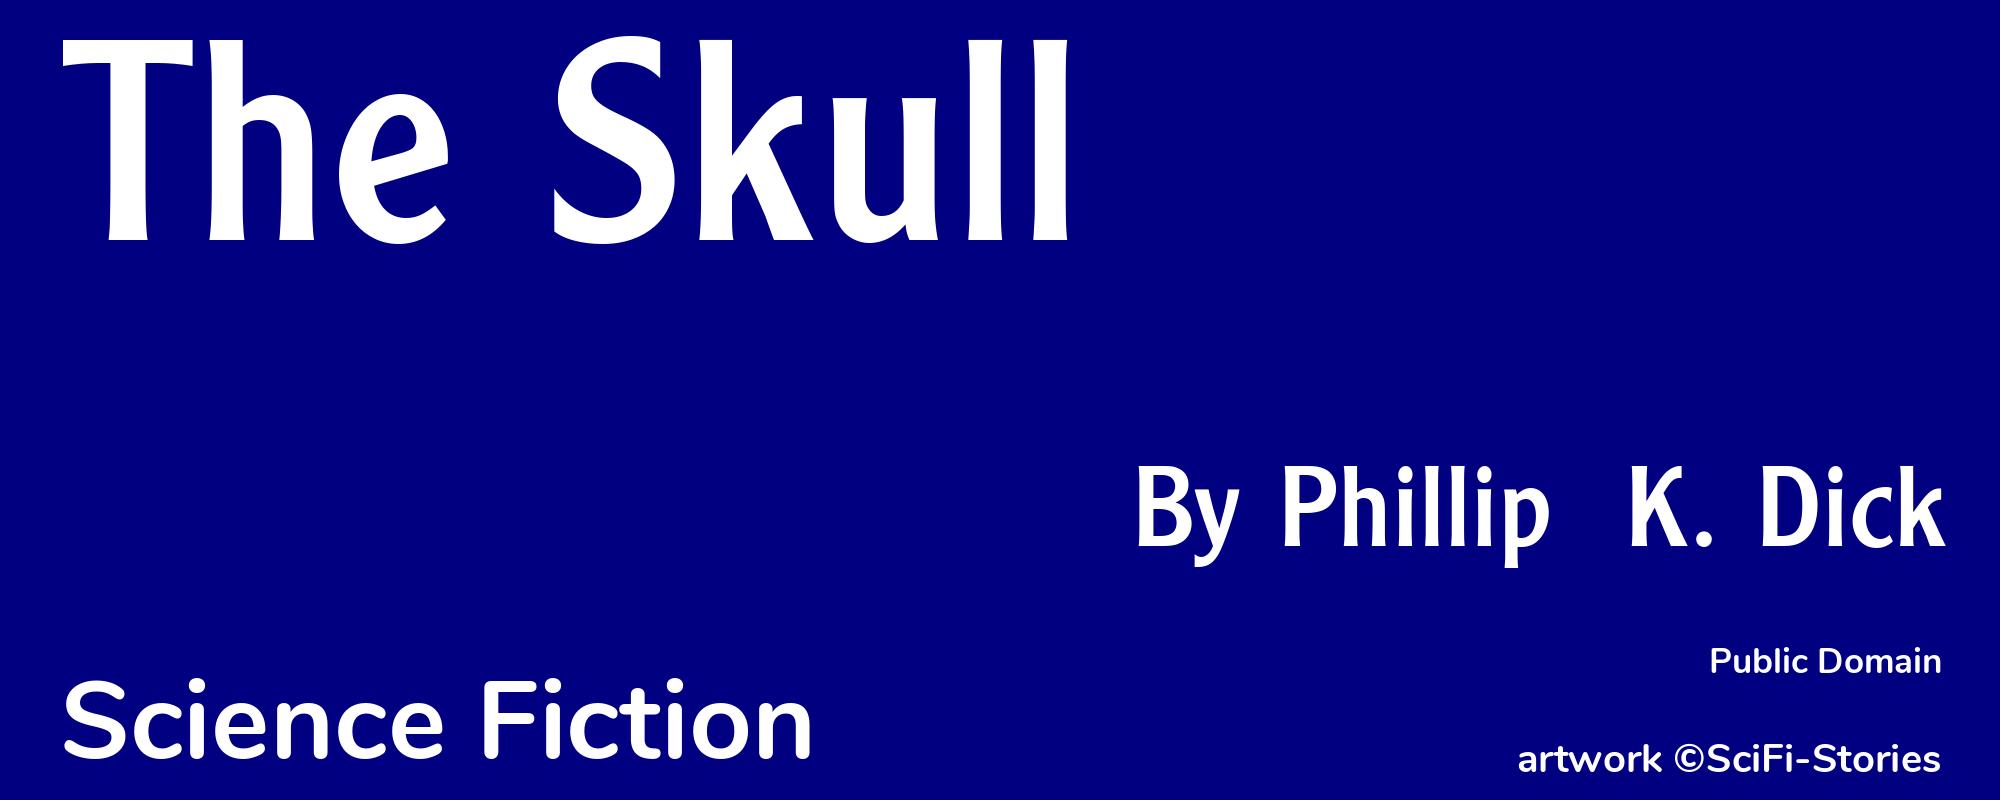 The Skull - Cover